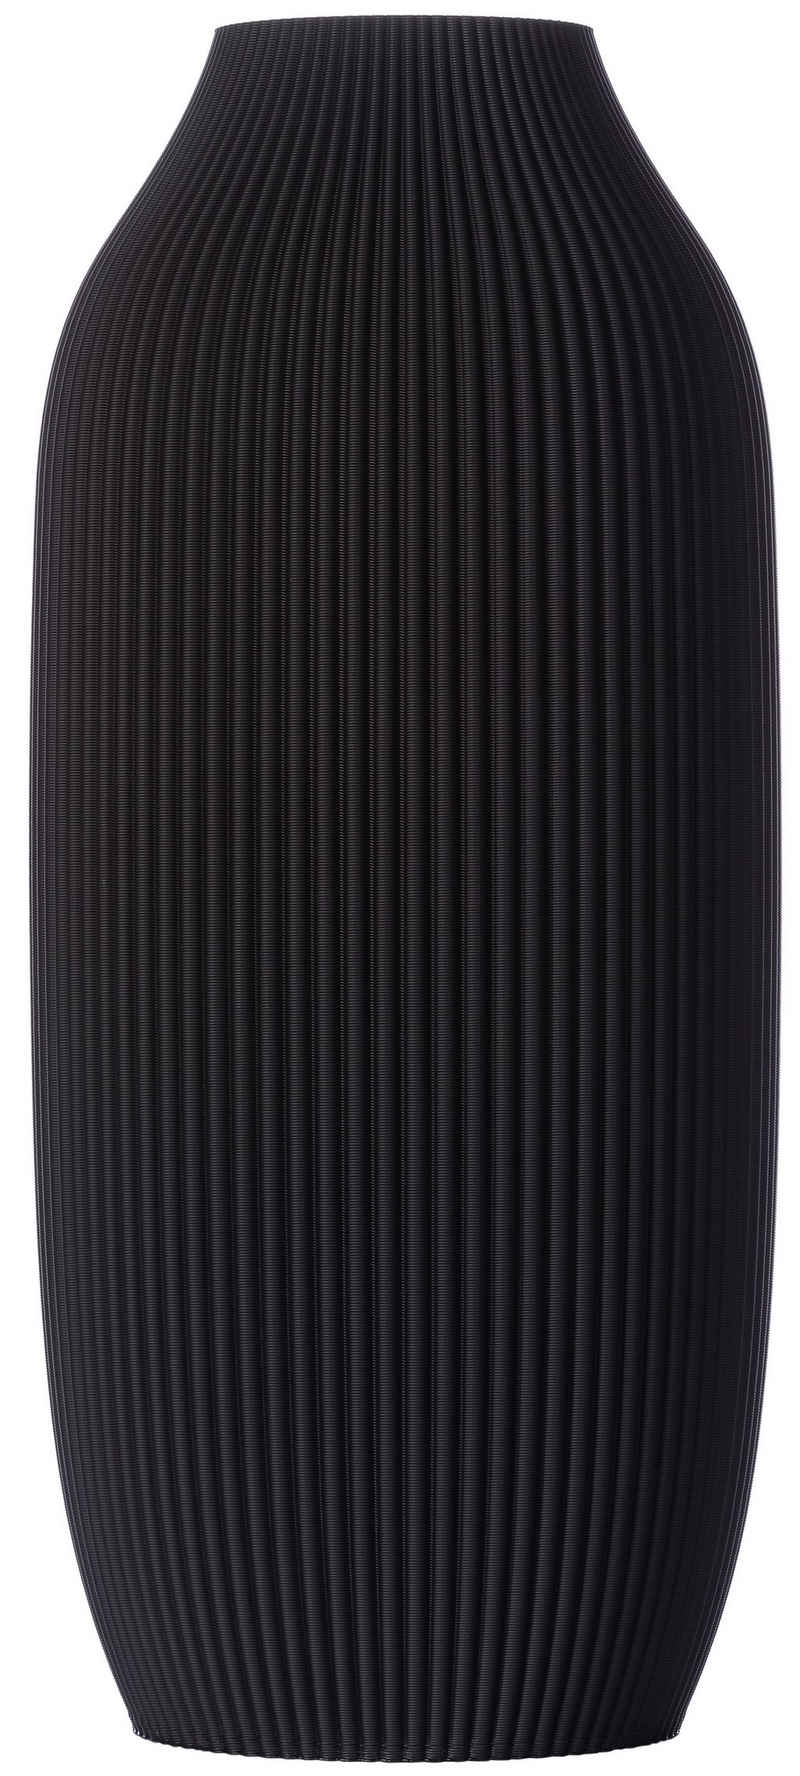 3D Vase Dekovase Stella XL 38cm Эко-товарe Deko Vase Pampasgras Сухоцветы, Bodenvase